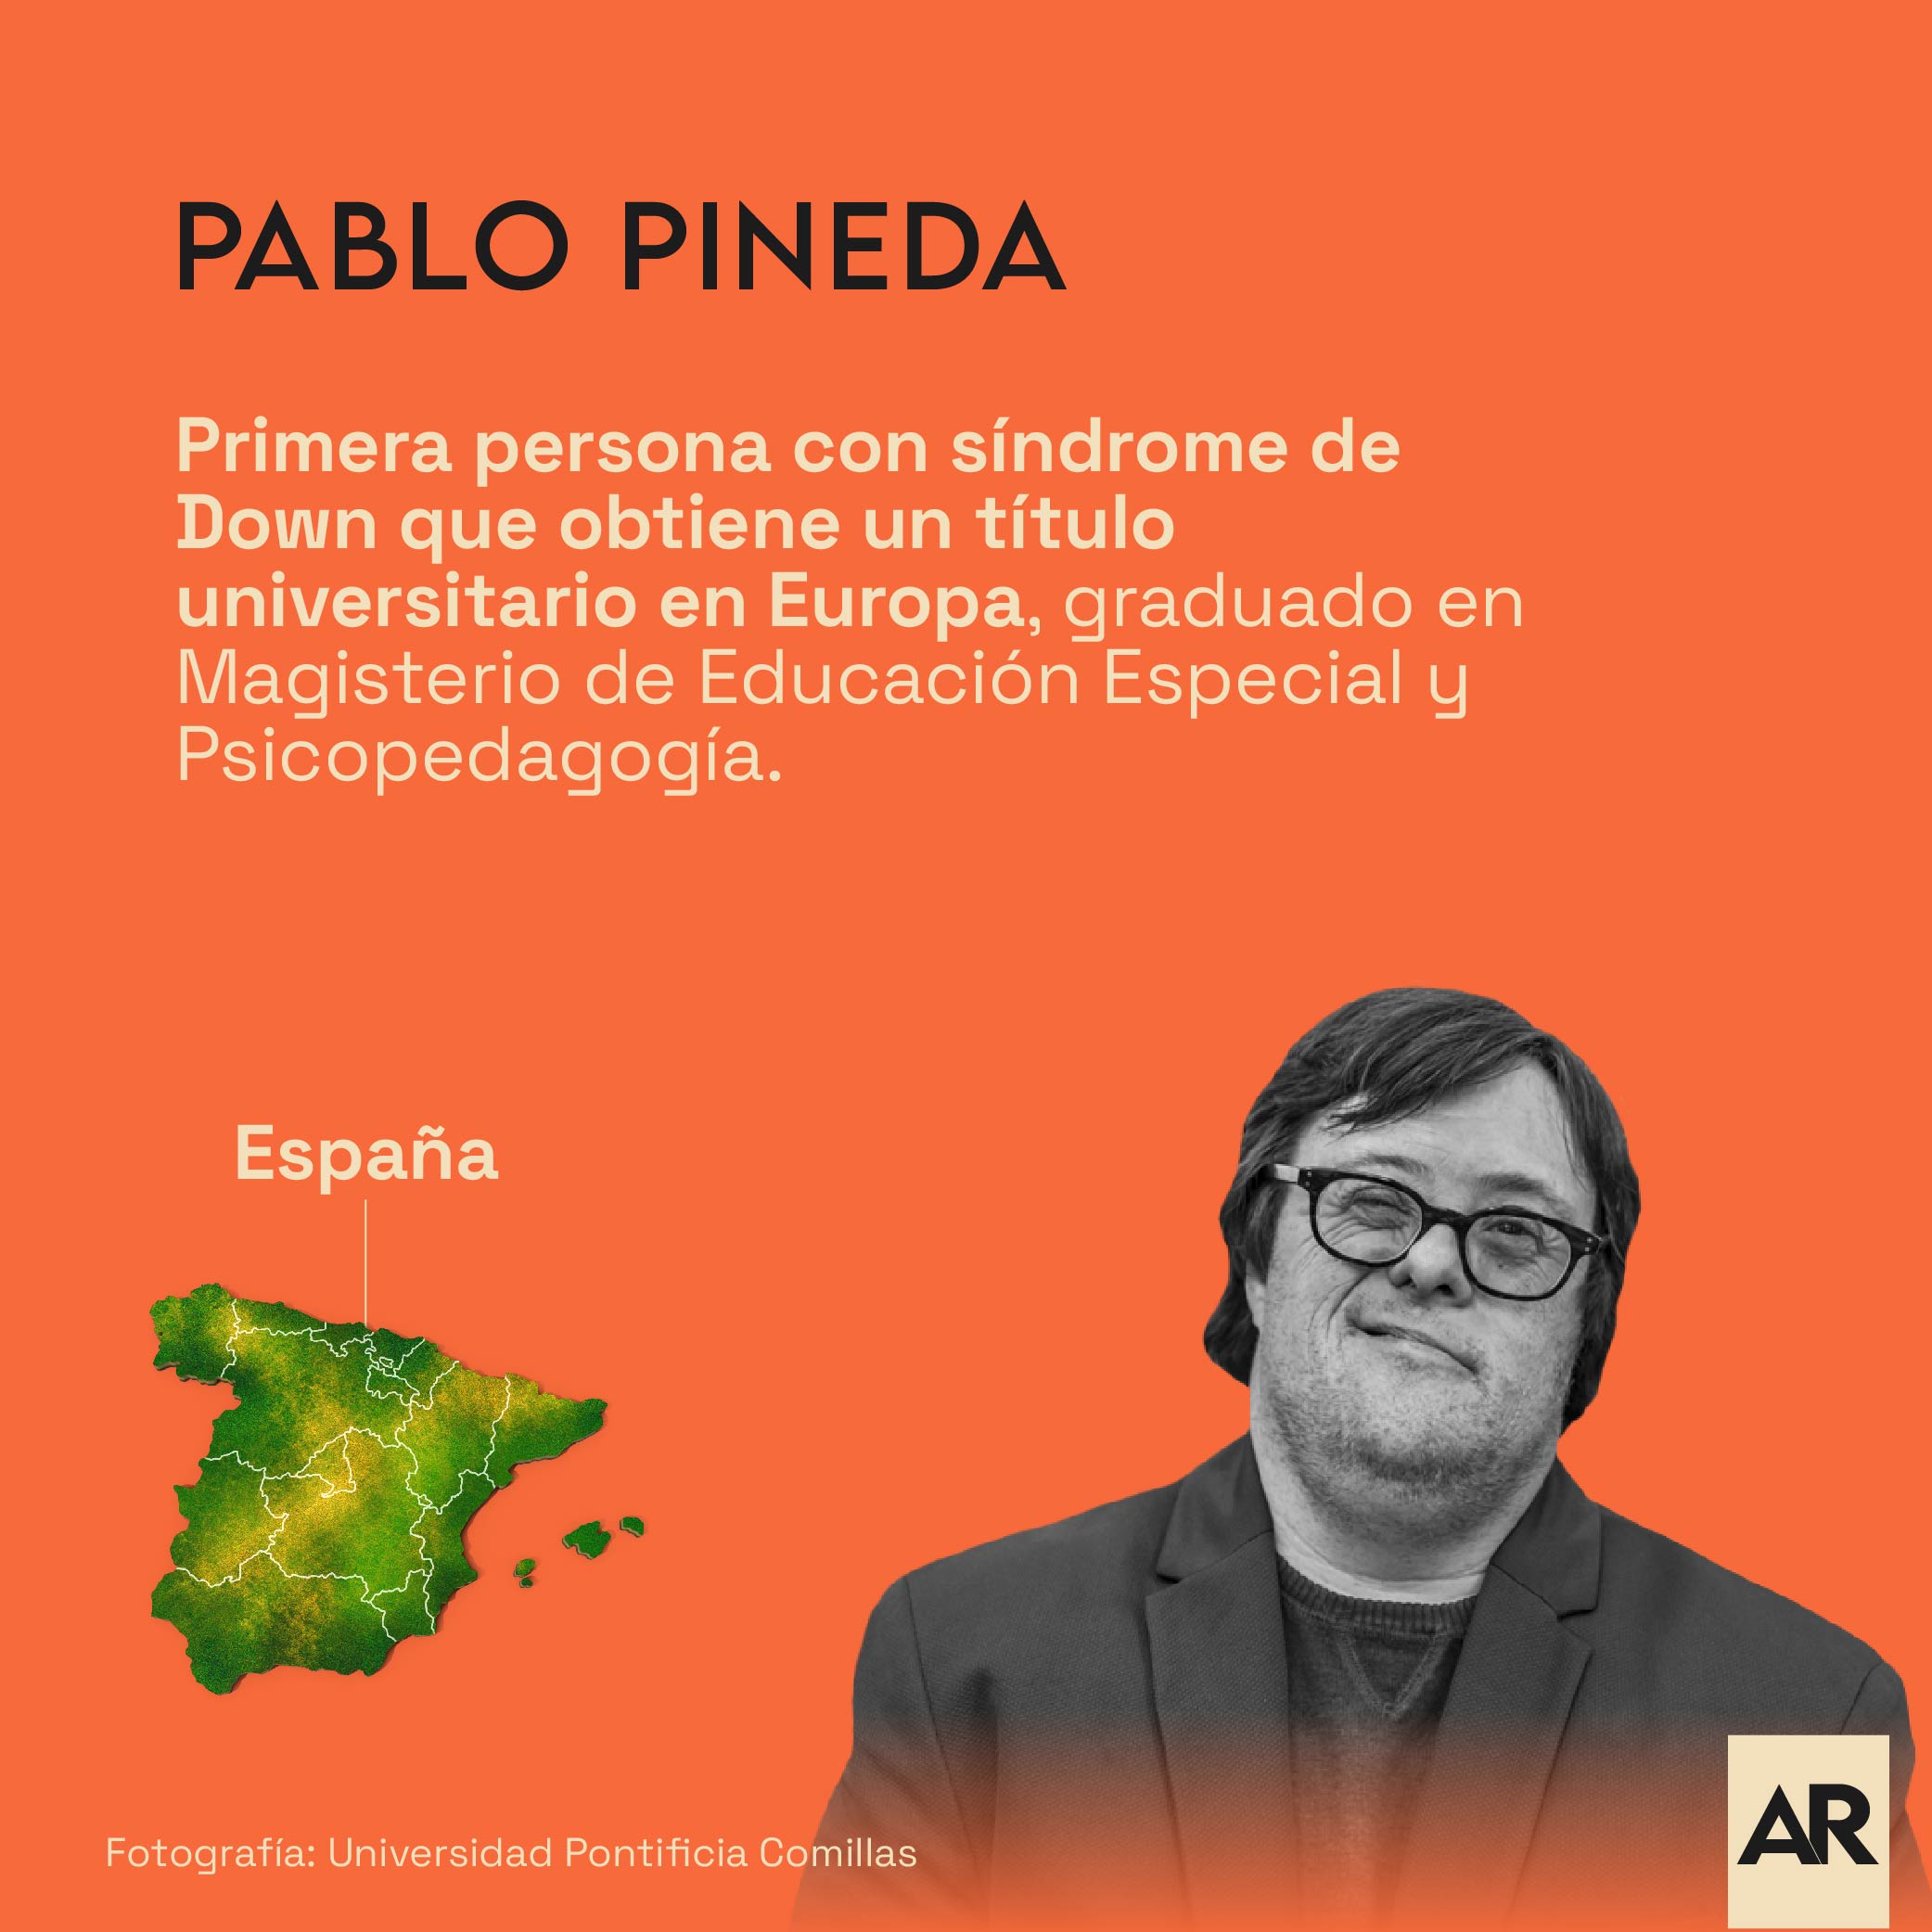 Pablo Pineda